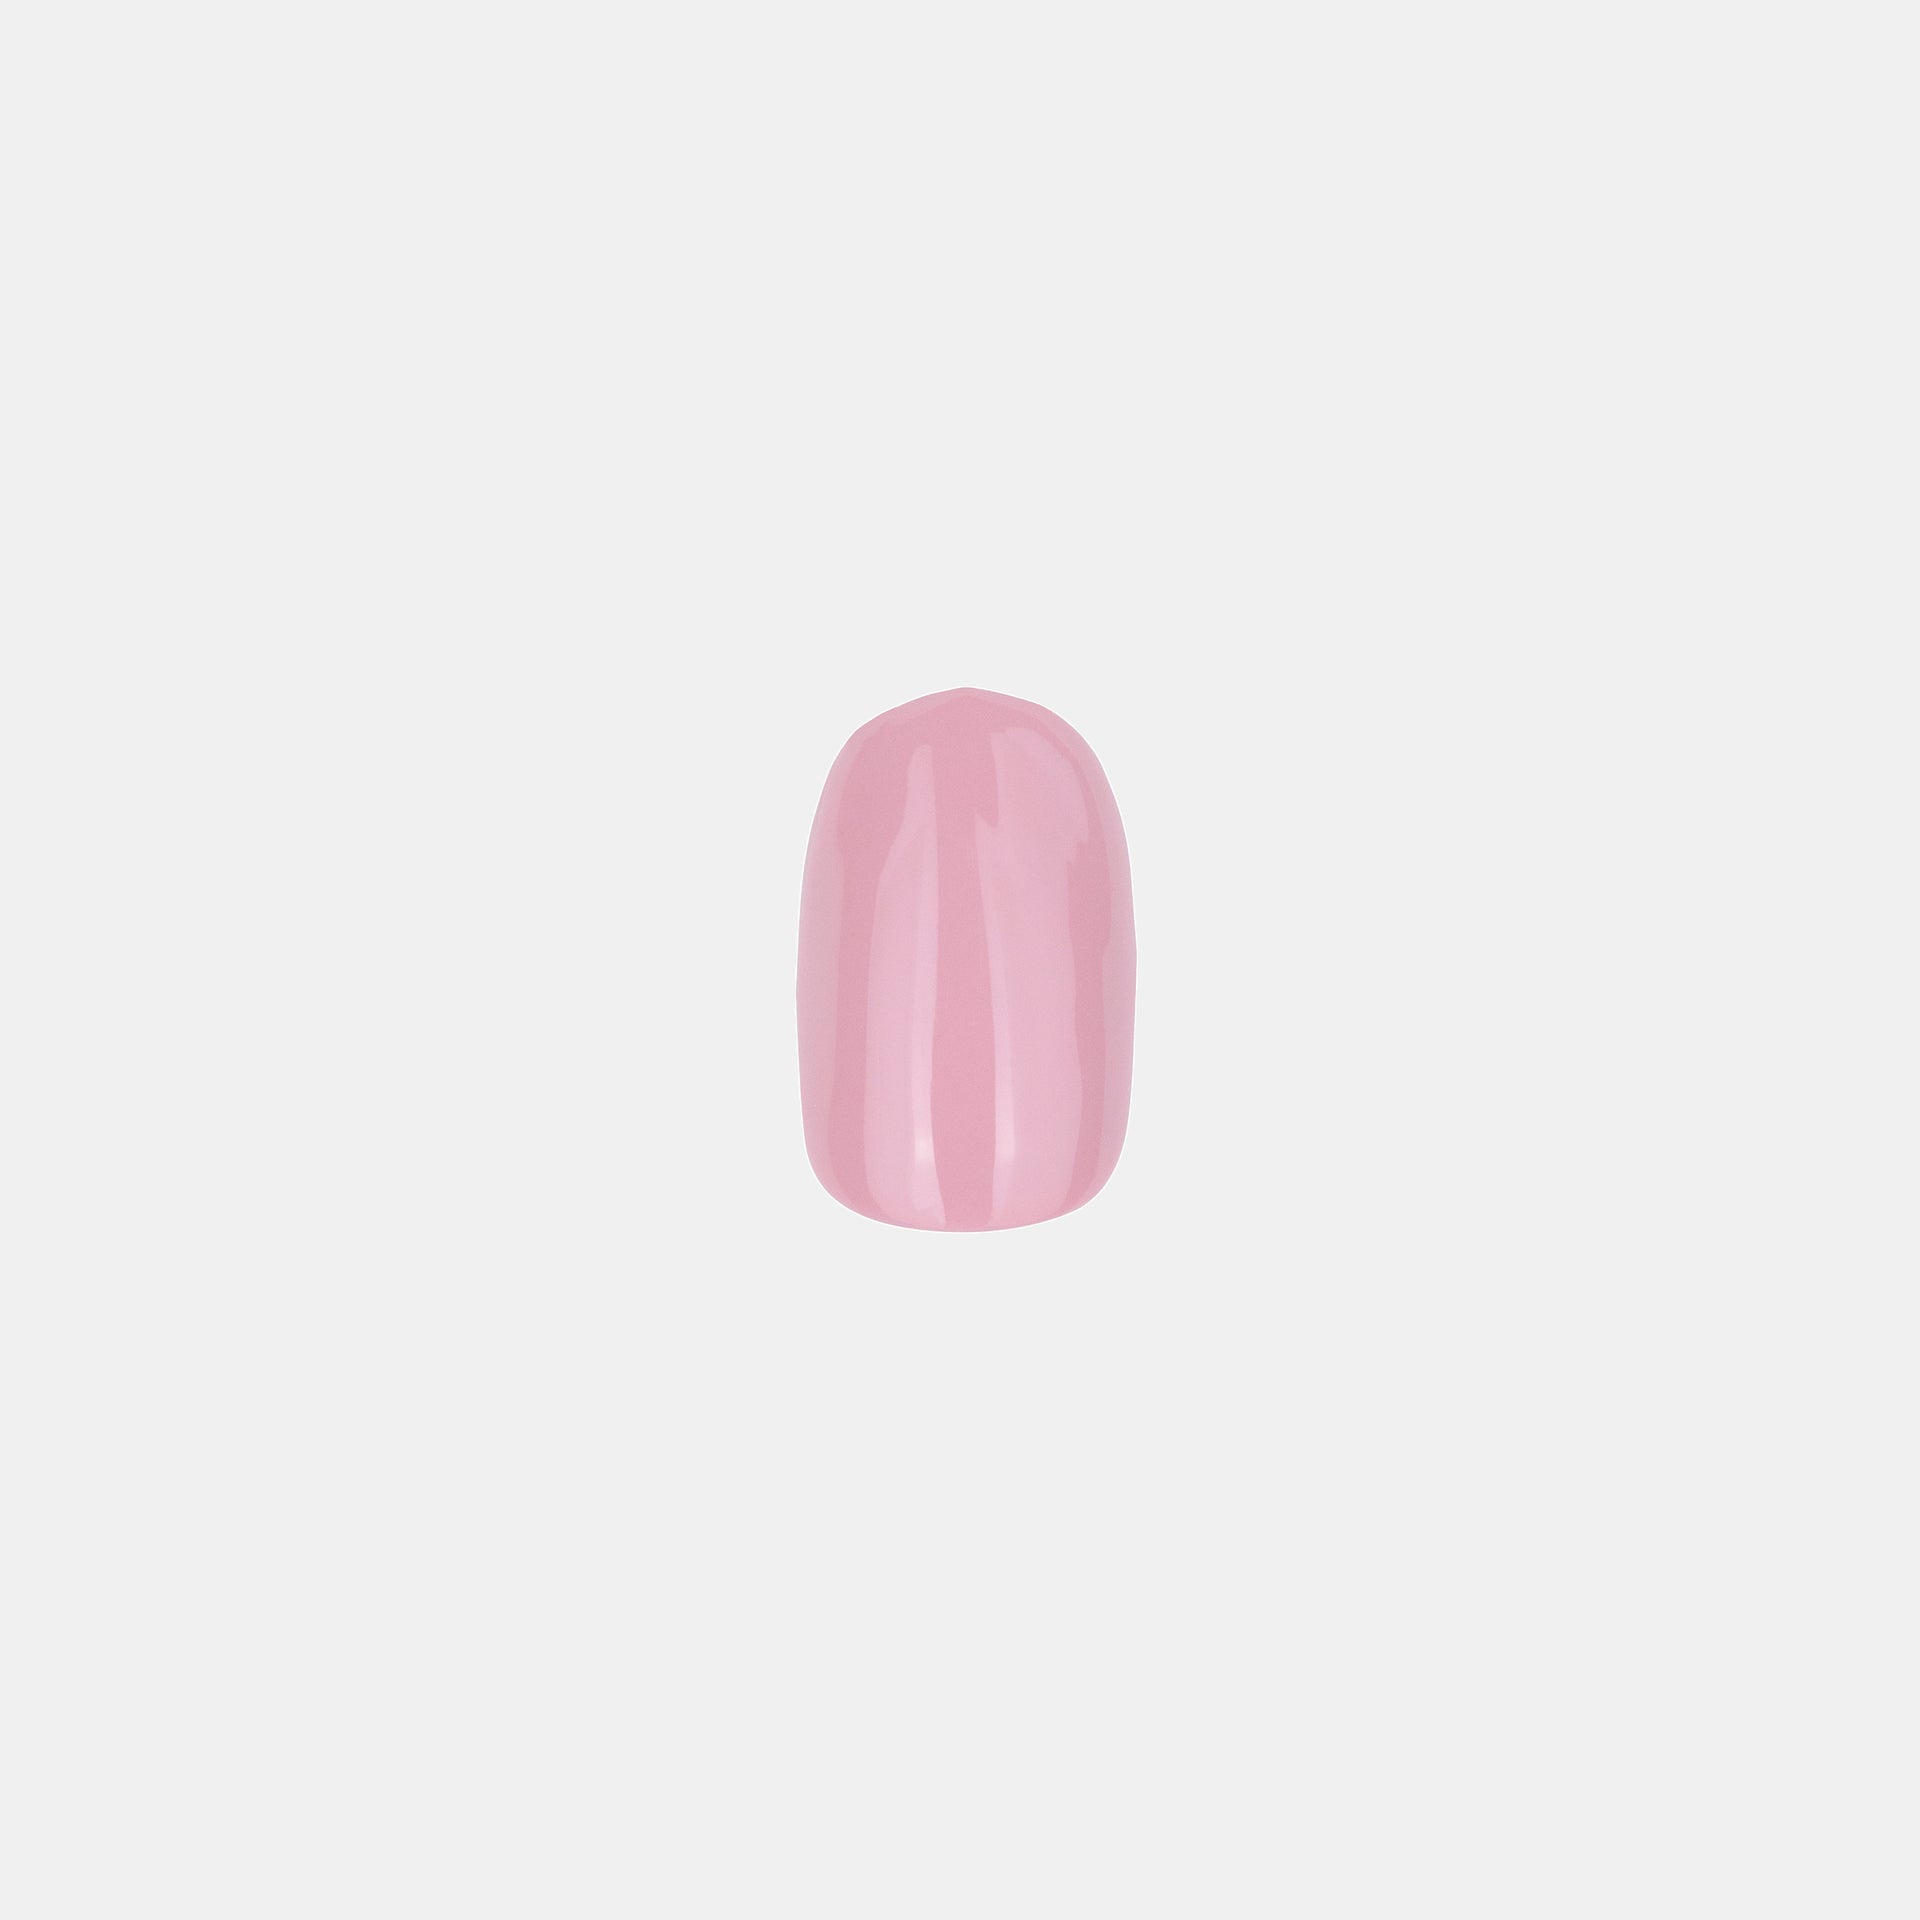 BESSIE Colour Gel - Bittersweet Pink (P10)